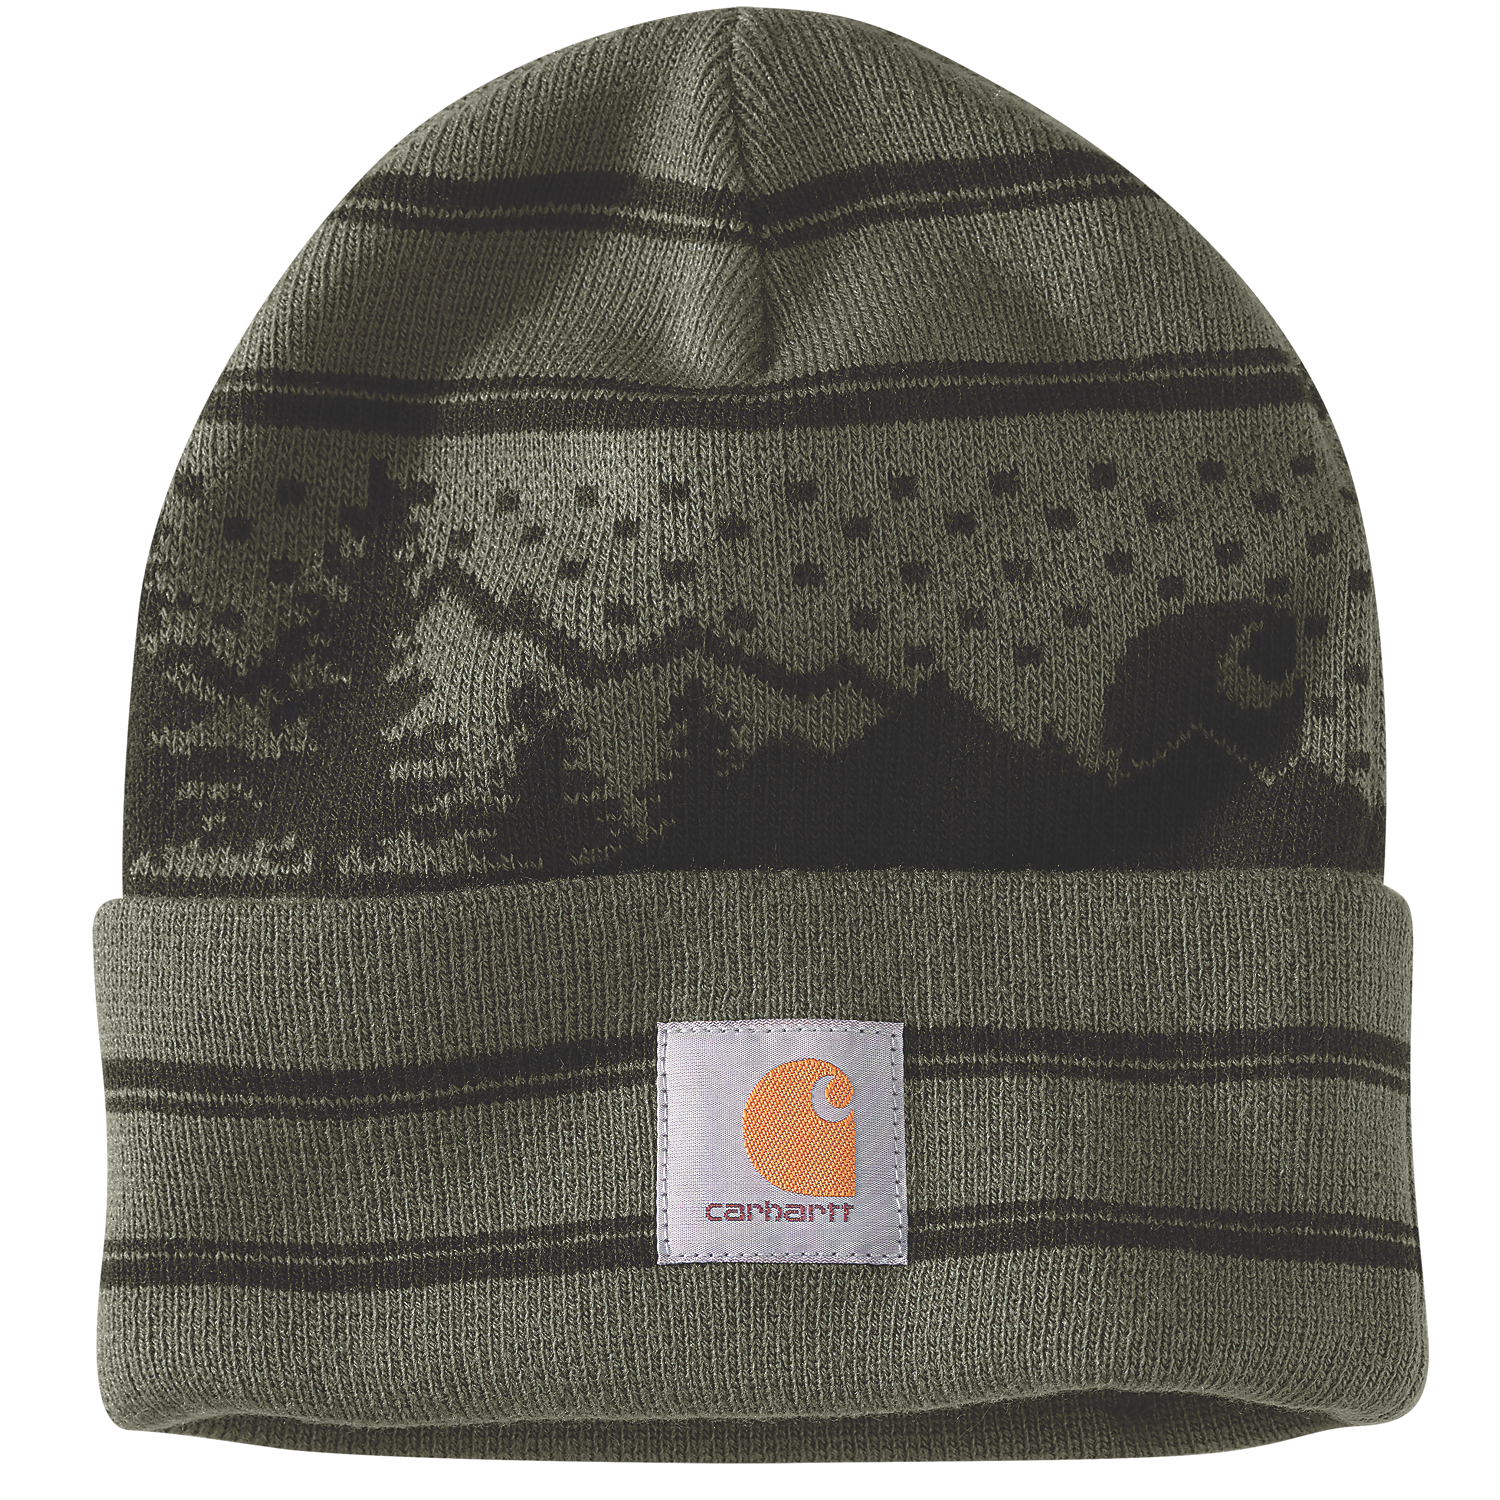 Carhartt Unisex Beanie, Knit Holiday Mütze aus Polyacryl, mit Carhartt Logo